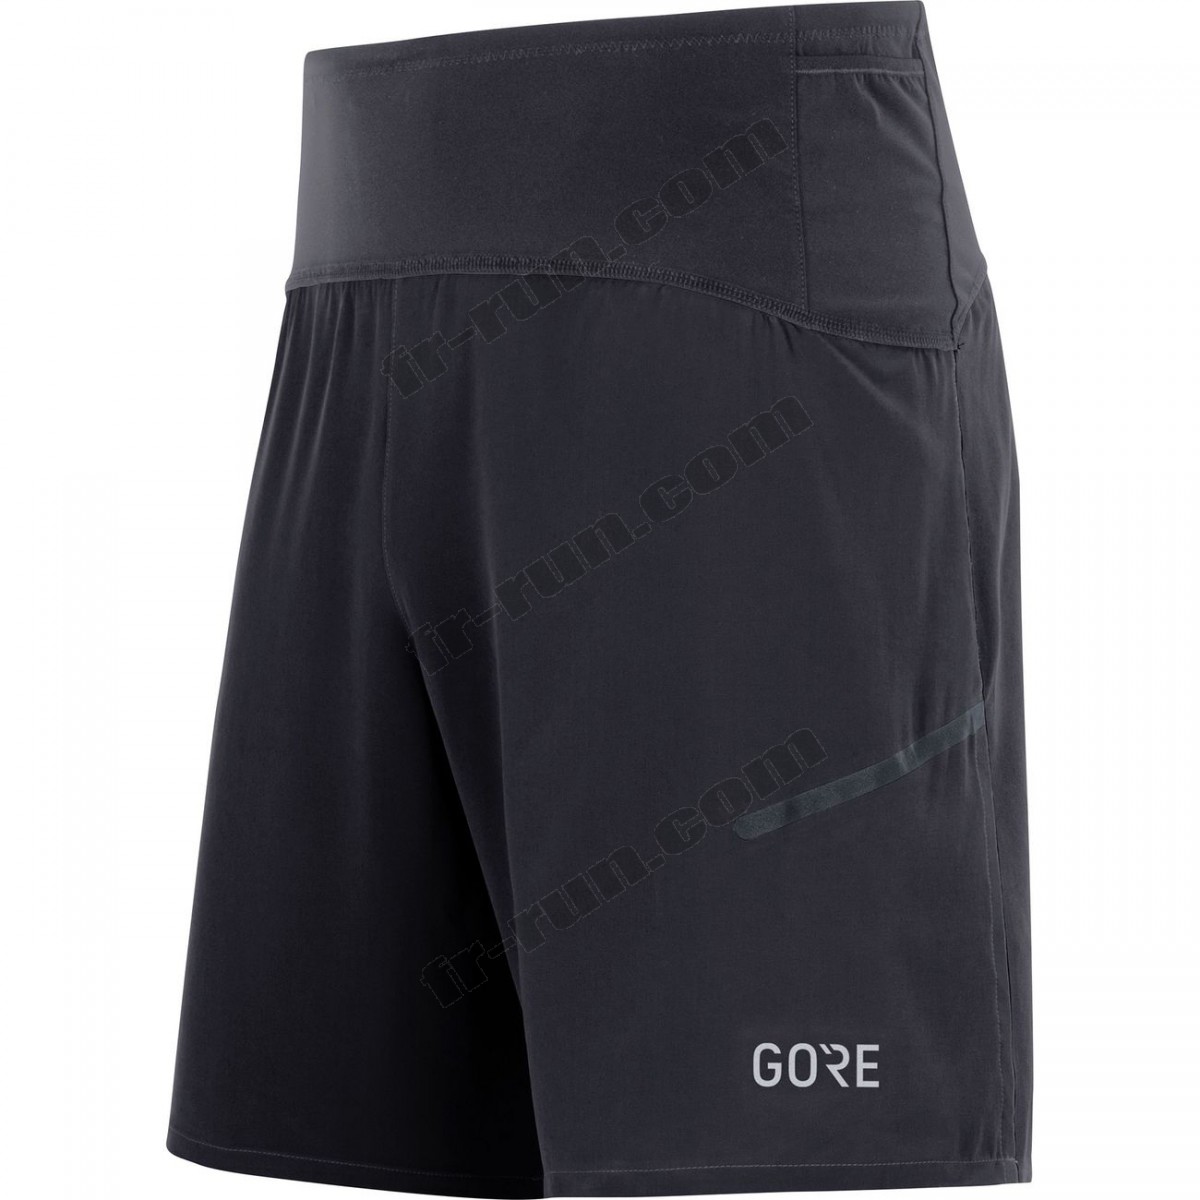 Gore/running homme GORE Gore® Wear R7 ◇◇◇ Pas Cher Du Tout - Gore/running homme GORE Gore® Wear R7 ◇◇◇ Pas Cher Du Tout